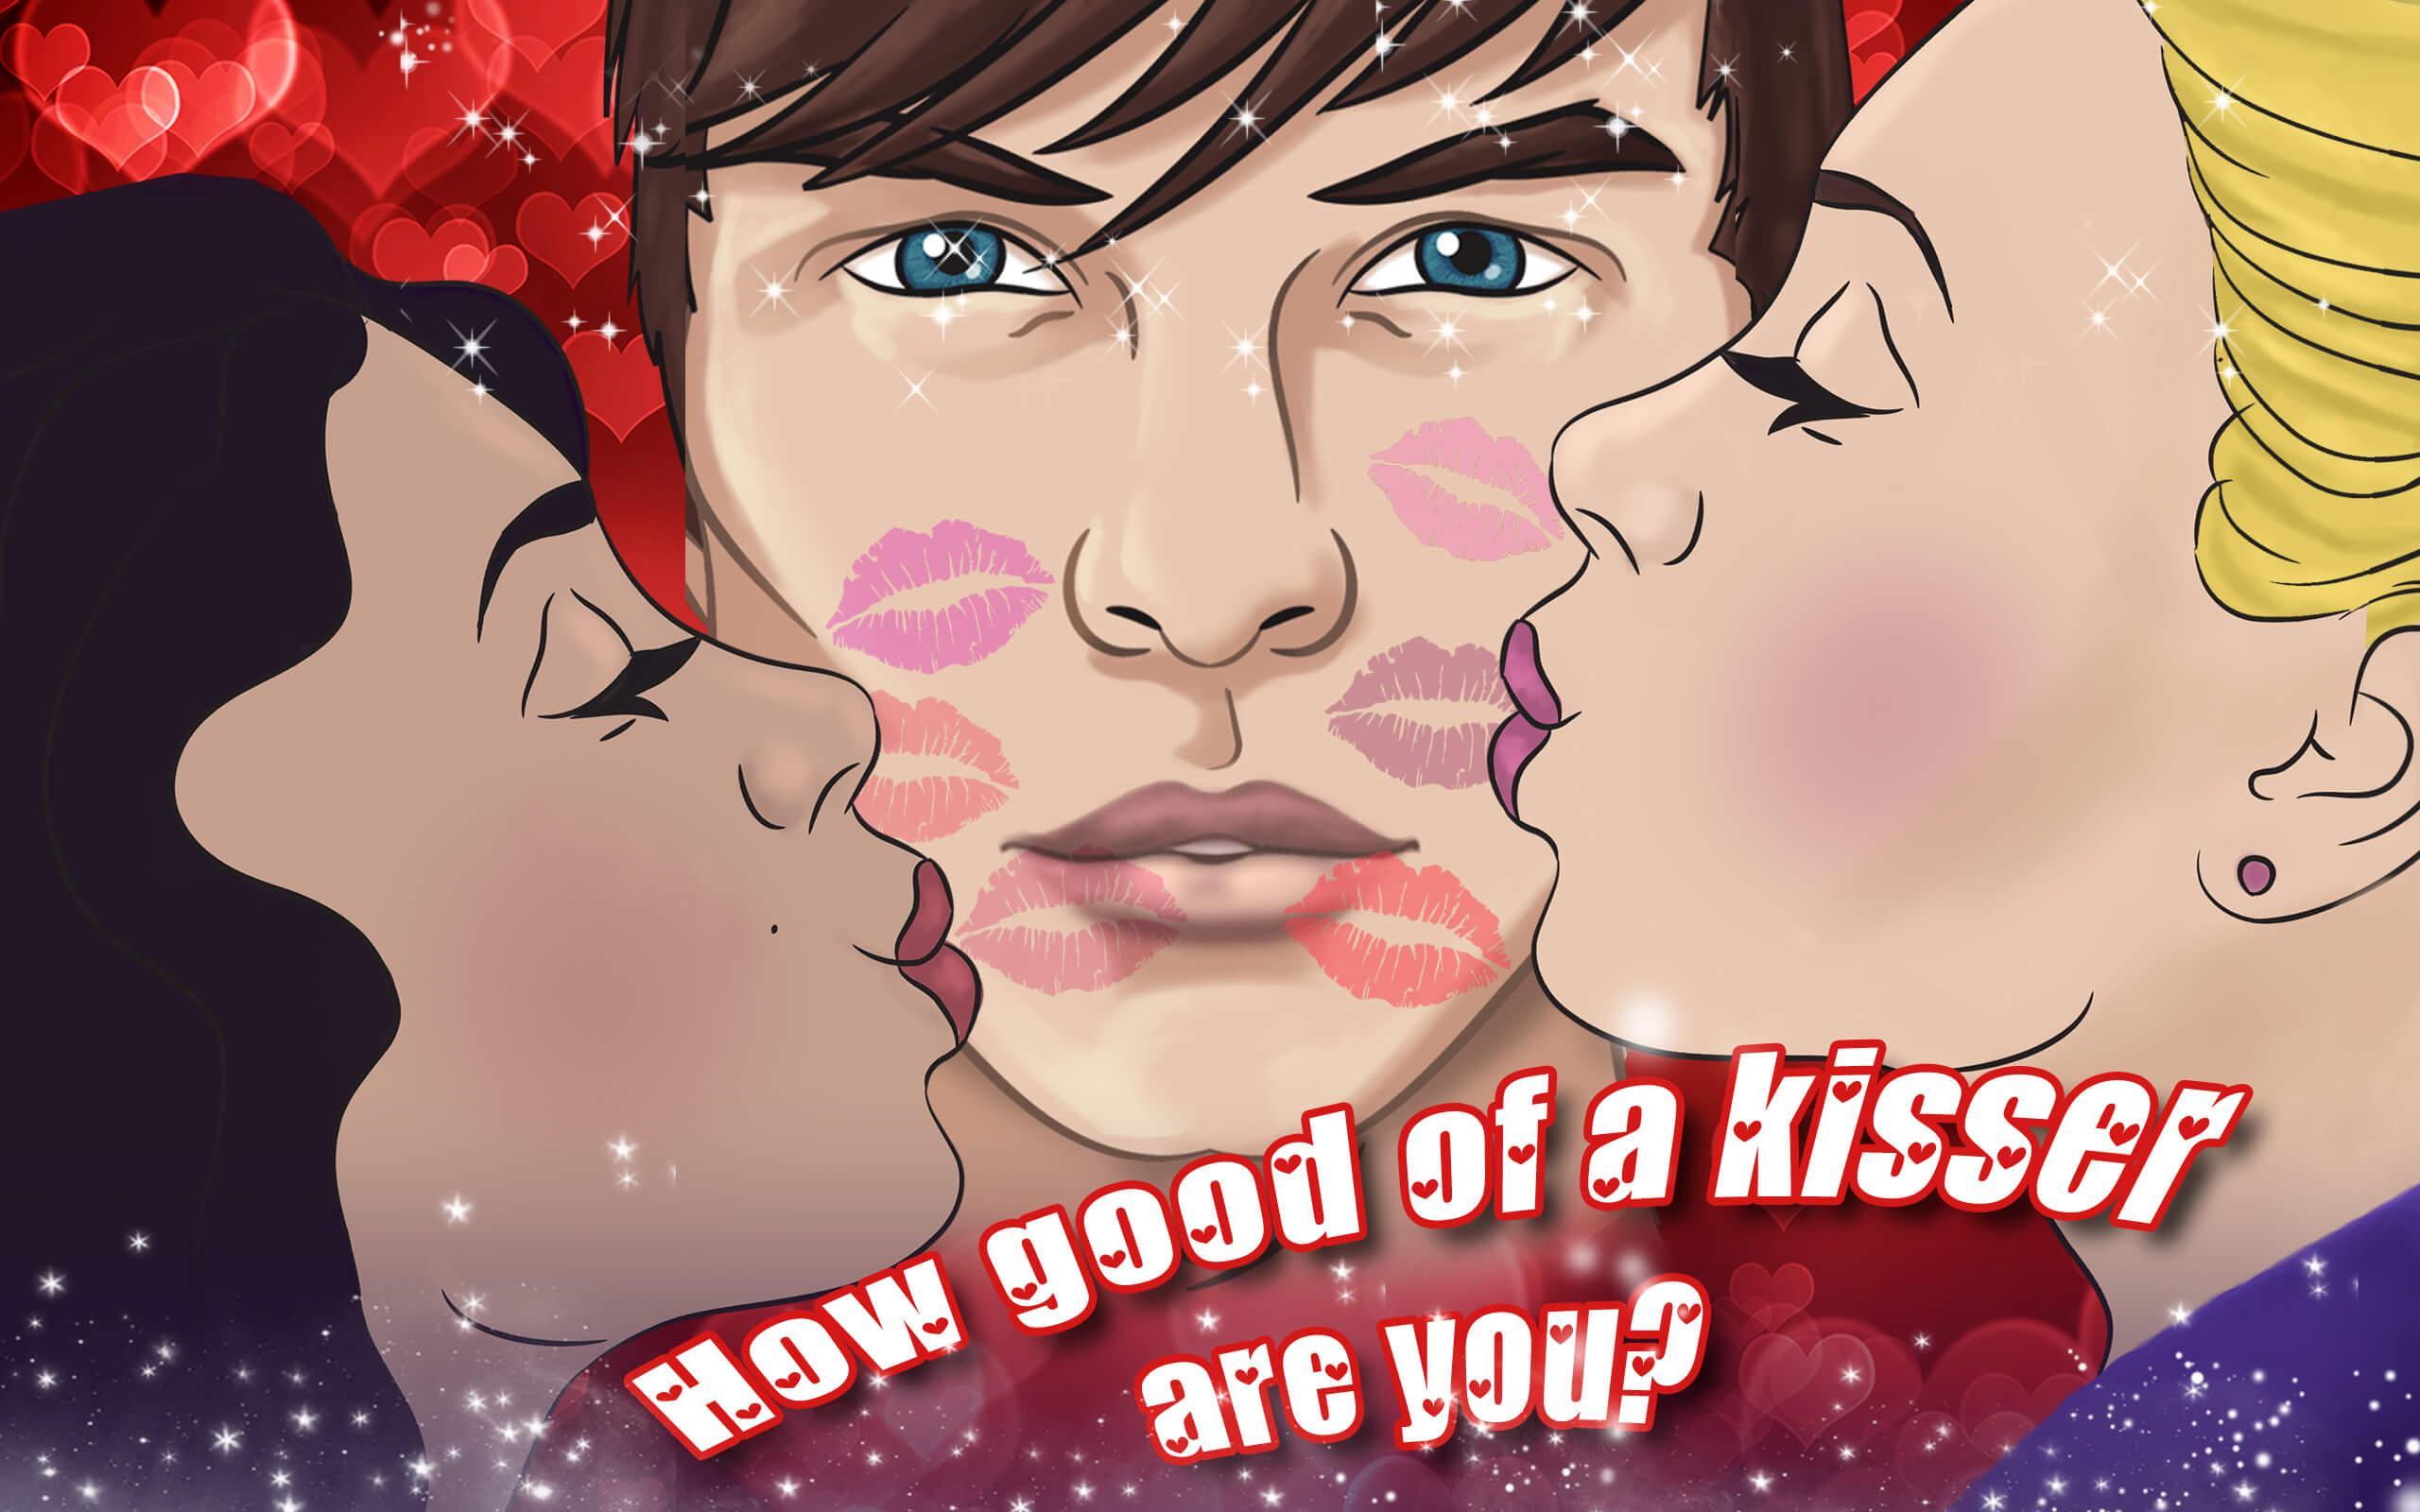 Kiss my game. Игра поцелуйчики. Игры поцелуи - поцелуйчики. Игра романтический поцелуй. На игре поцеловались.